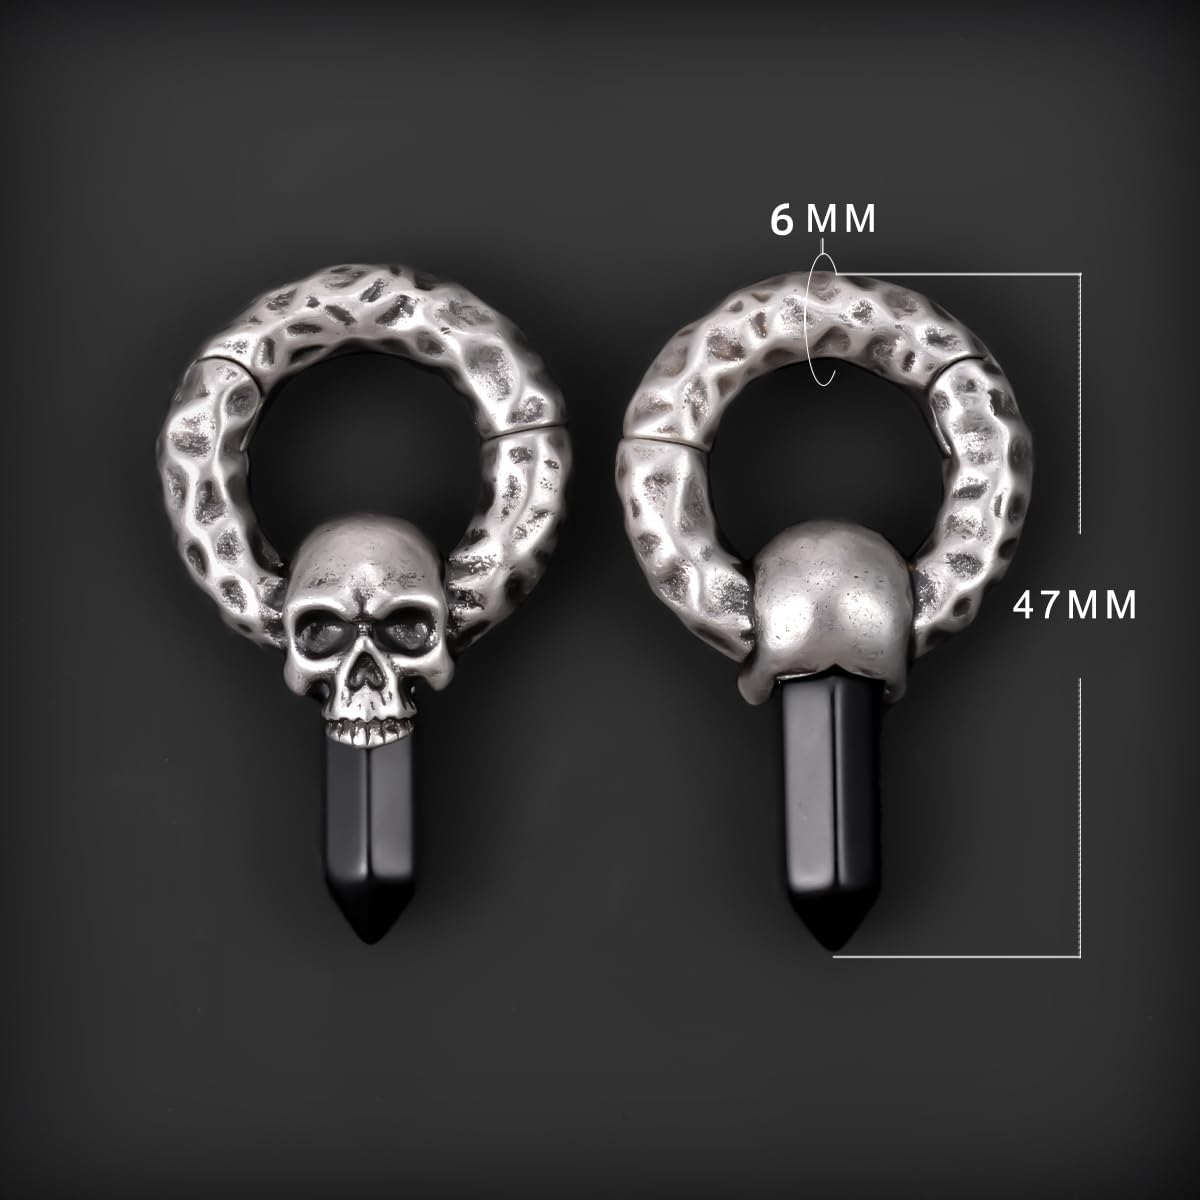 1 Pair 2g Ear Weights For Stretched Ears Heavy 6mm Ear Gauge Plug Tunnels Expander Piercing Earrings Dangle Gauge Hanger Earrings Jewelry